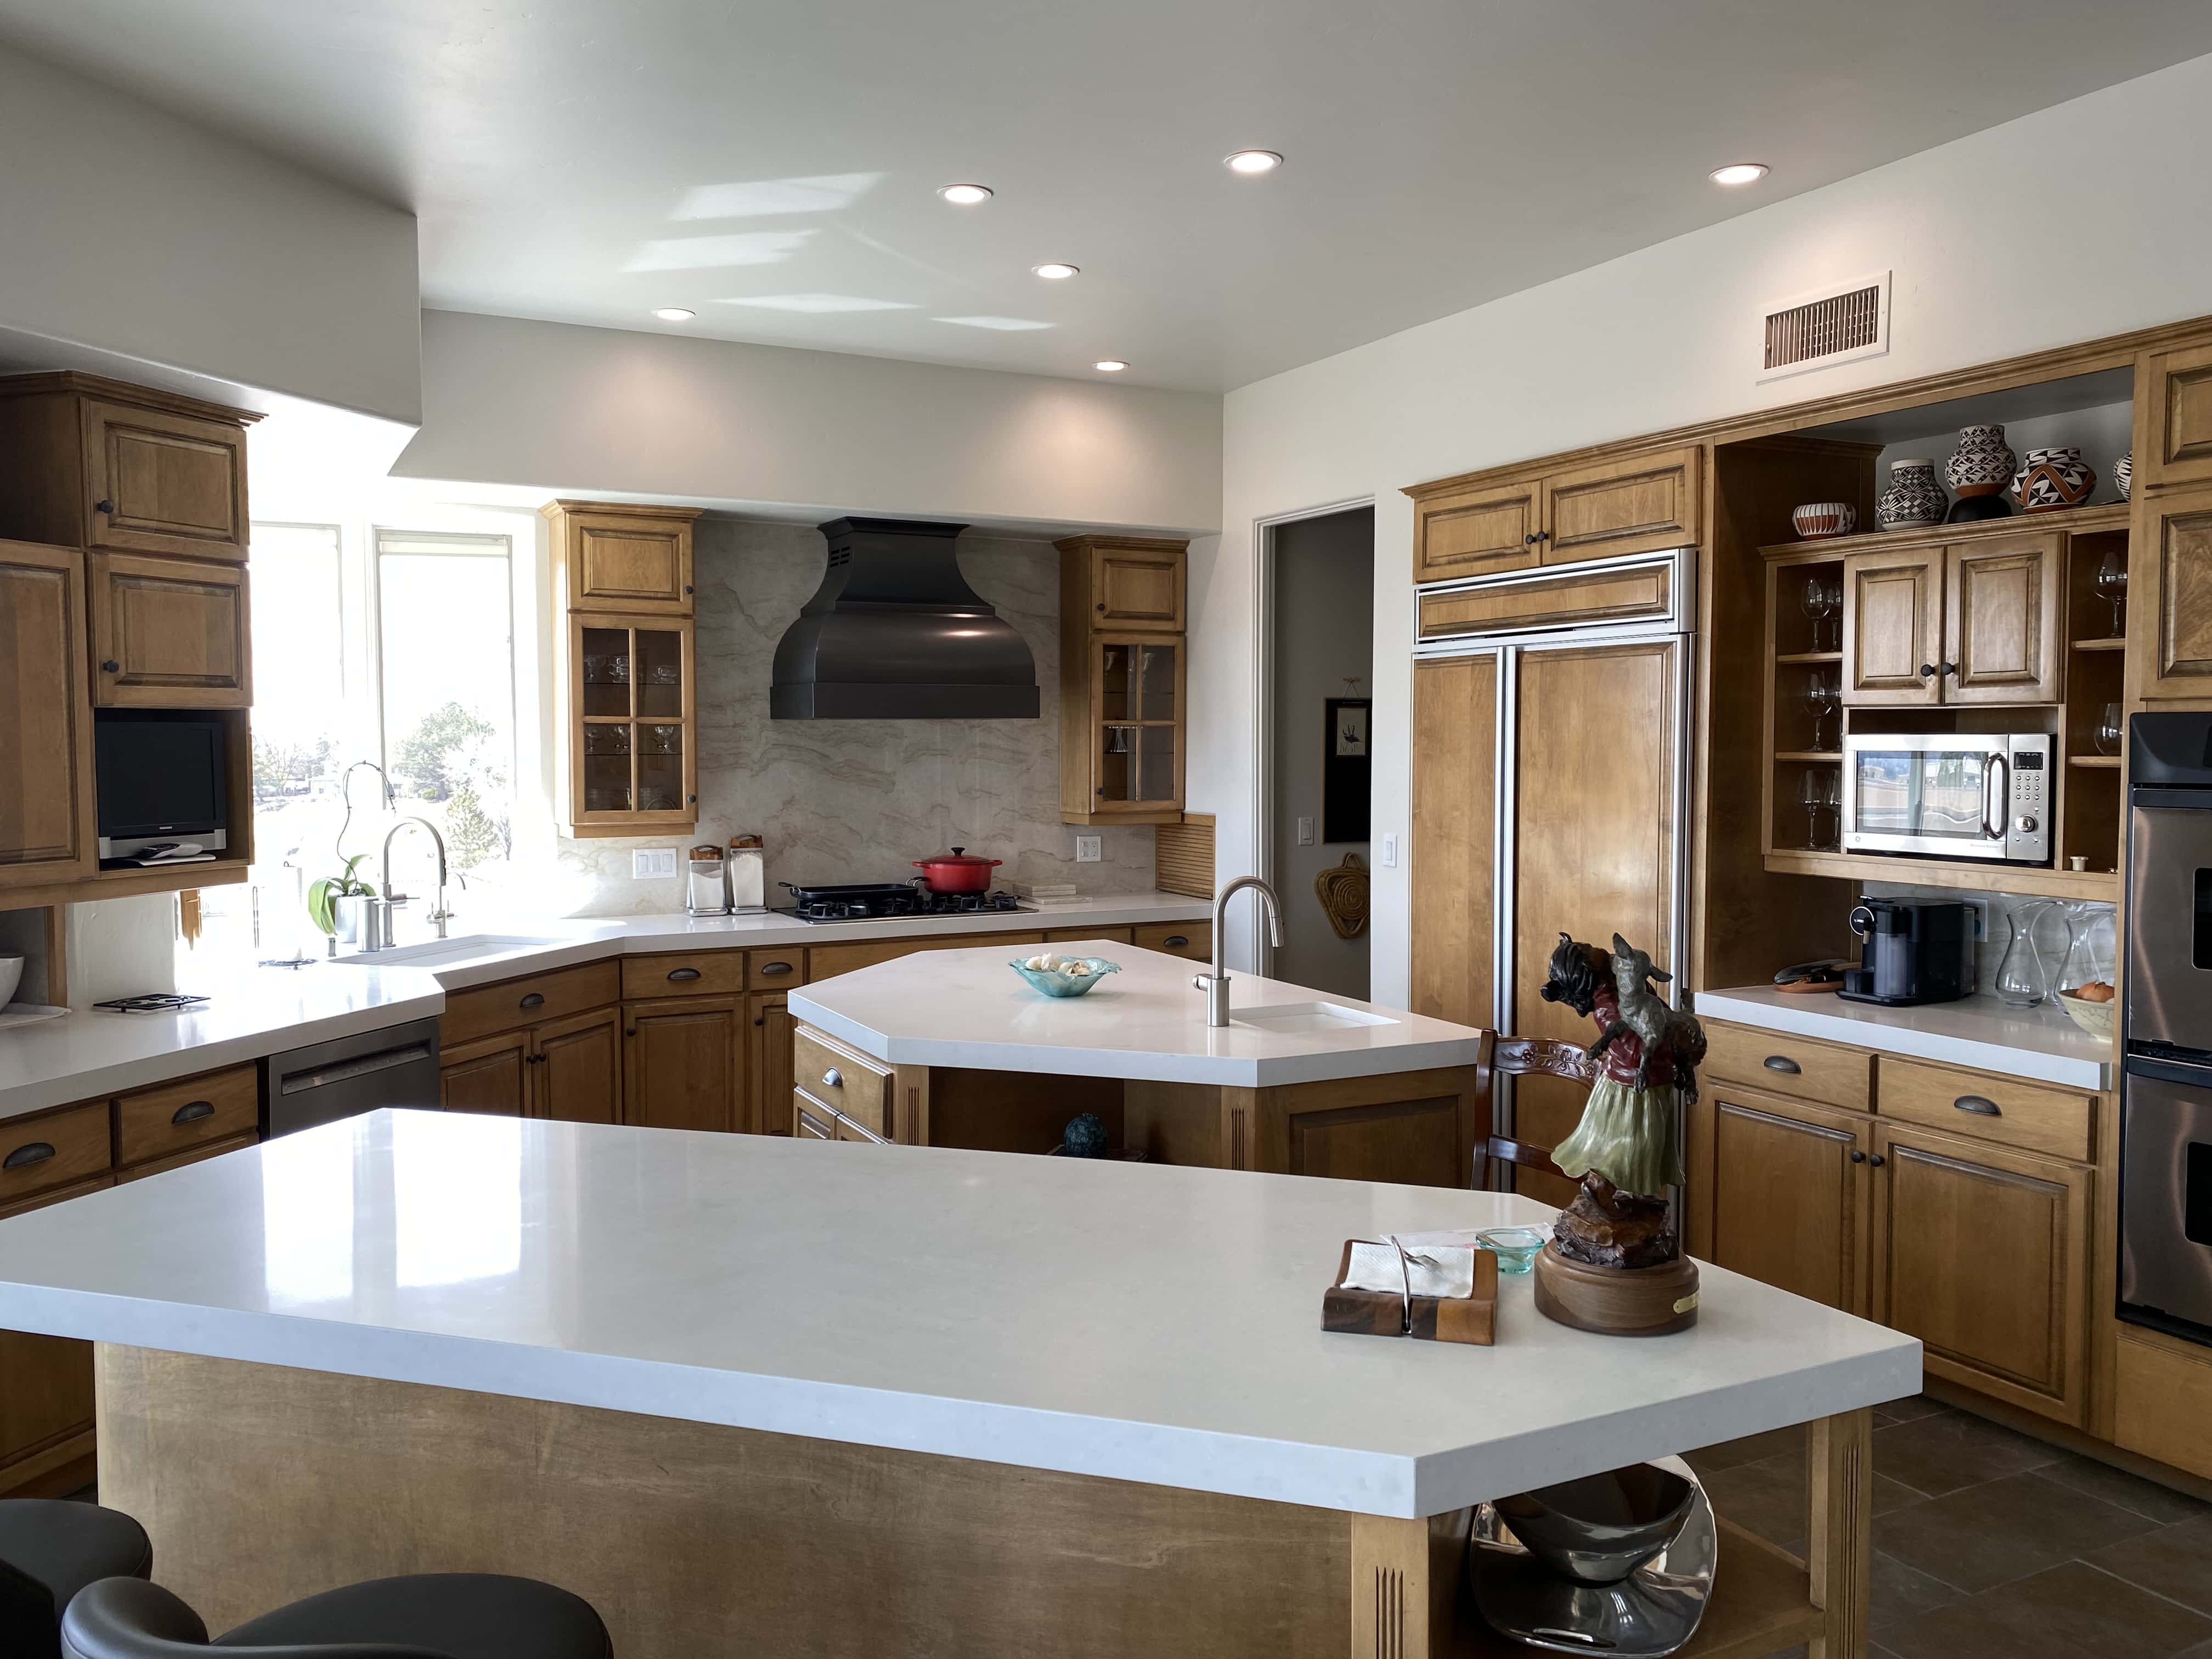 Stunning range hood, rich brown kitchen cabinets, complemented by pristine white kitchen countertops luxurious marble backsplash